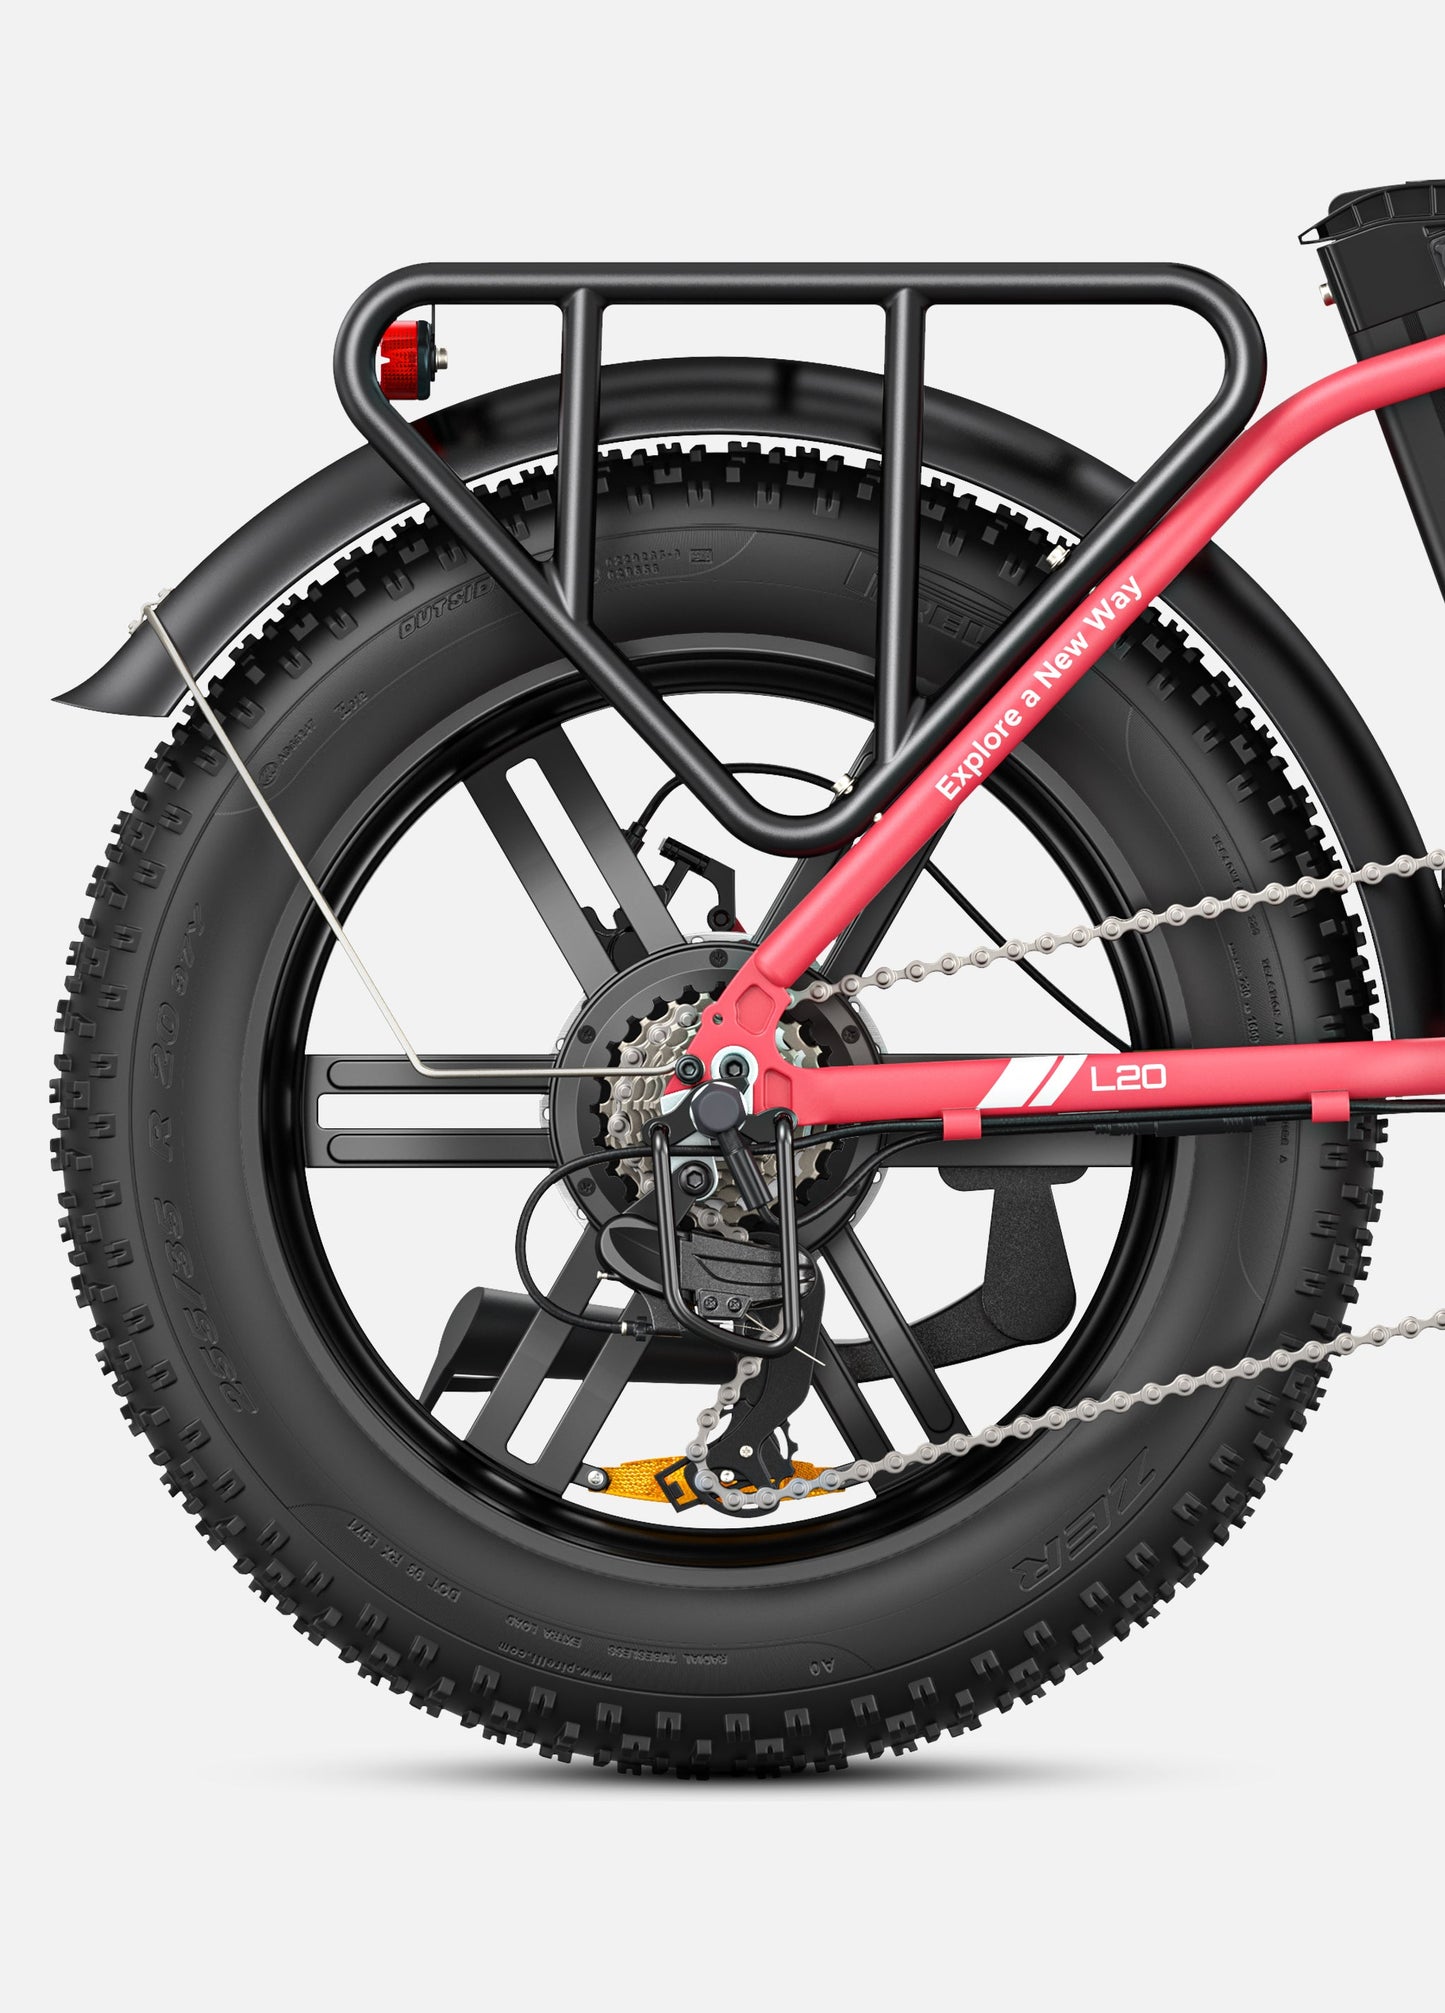 ENGWE L20 | Bicicletta Elettrica | Versatile | Motore 250W | 48V 13Ah | 25km/h | Autonomia 140Km| GARANZIA ITALIANA